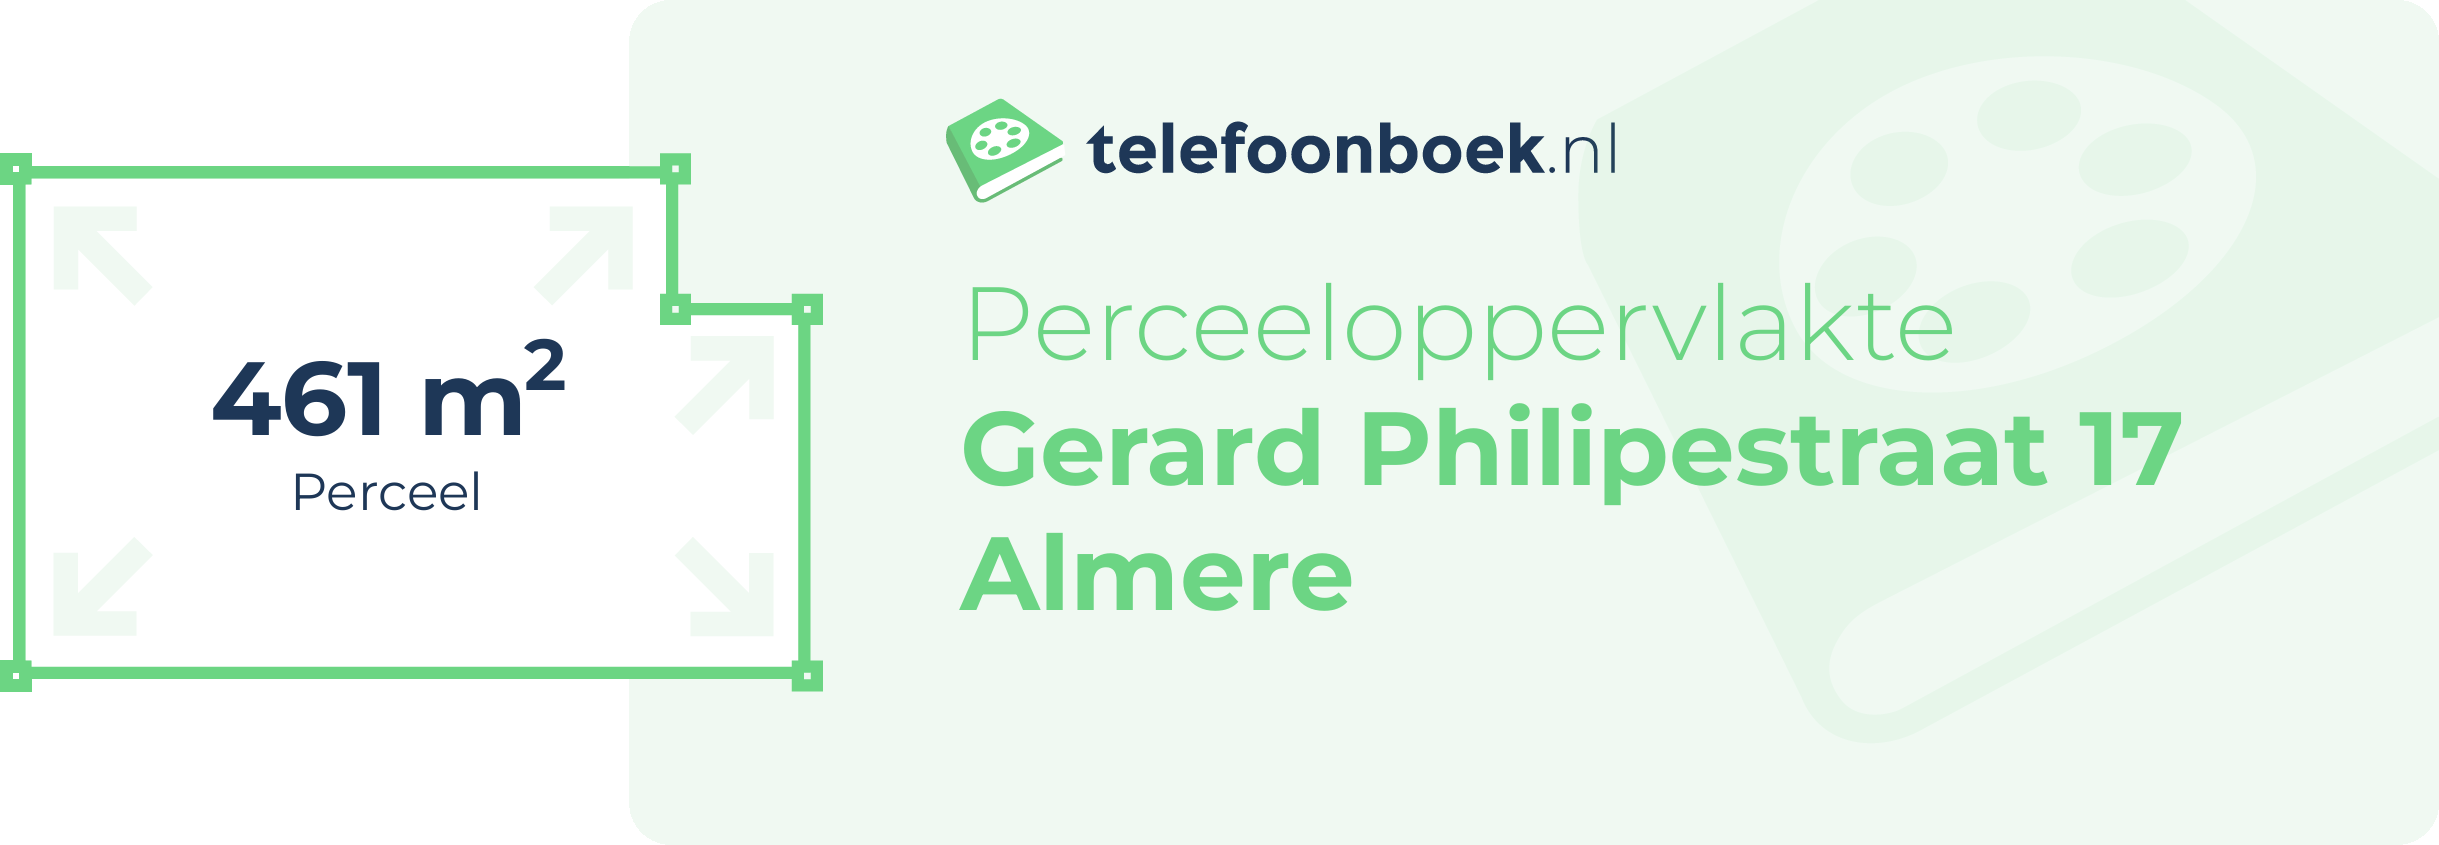 Perceeloppervlakte Gerard Philipestraat 17 Almere